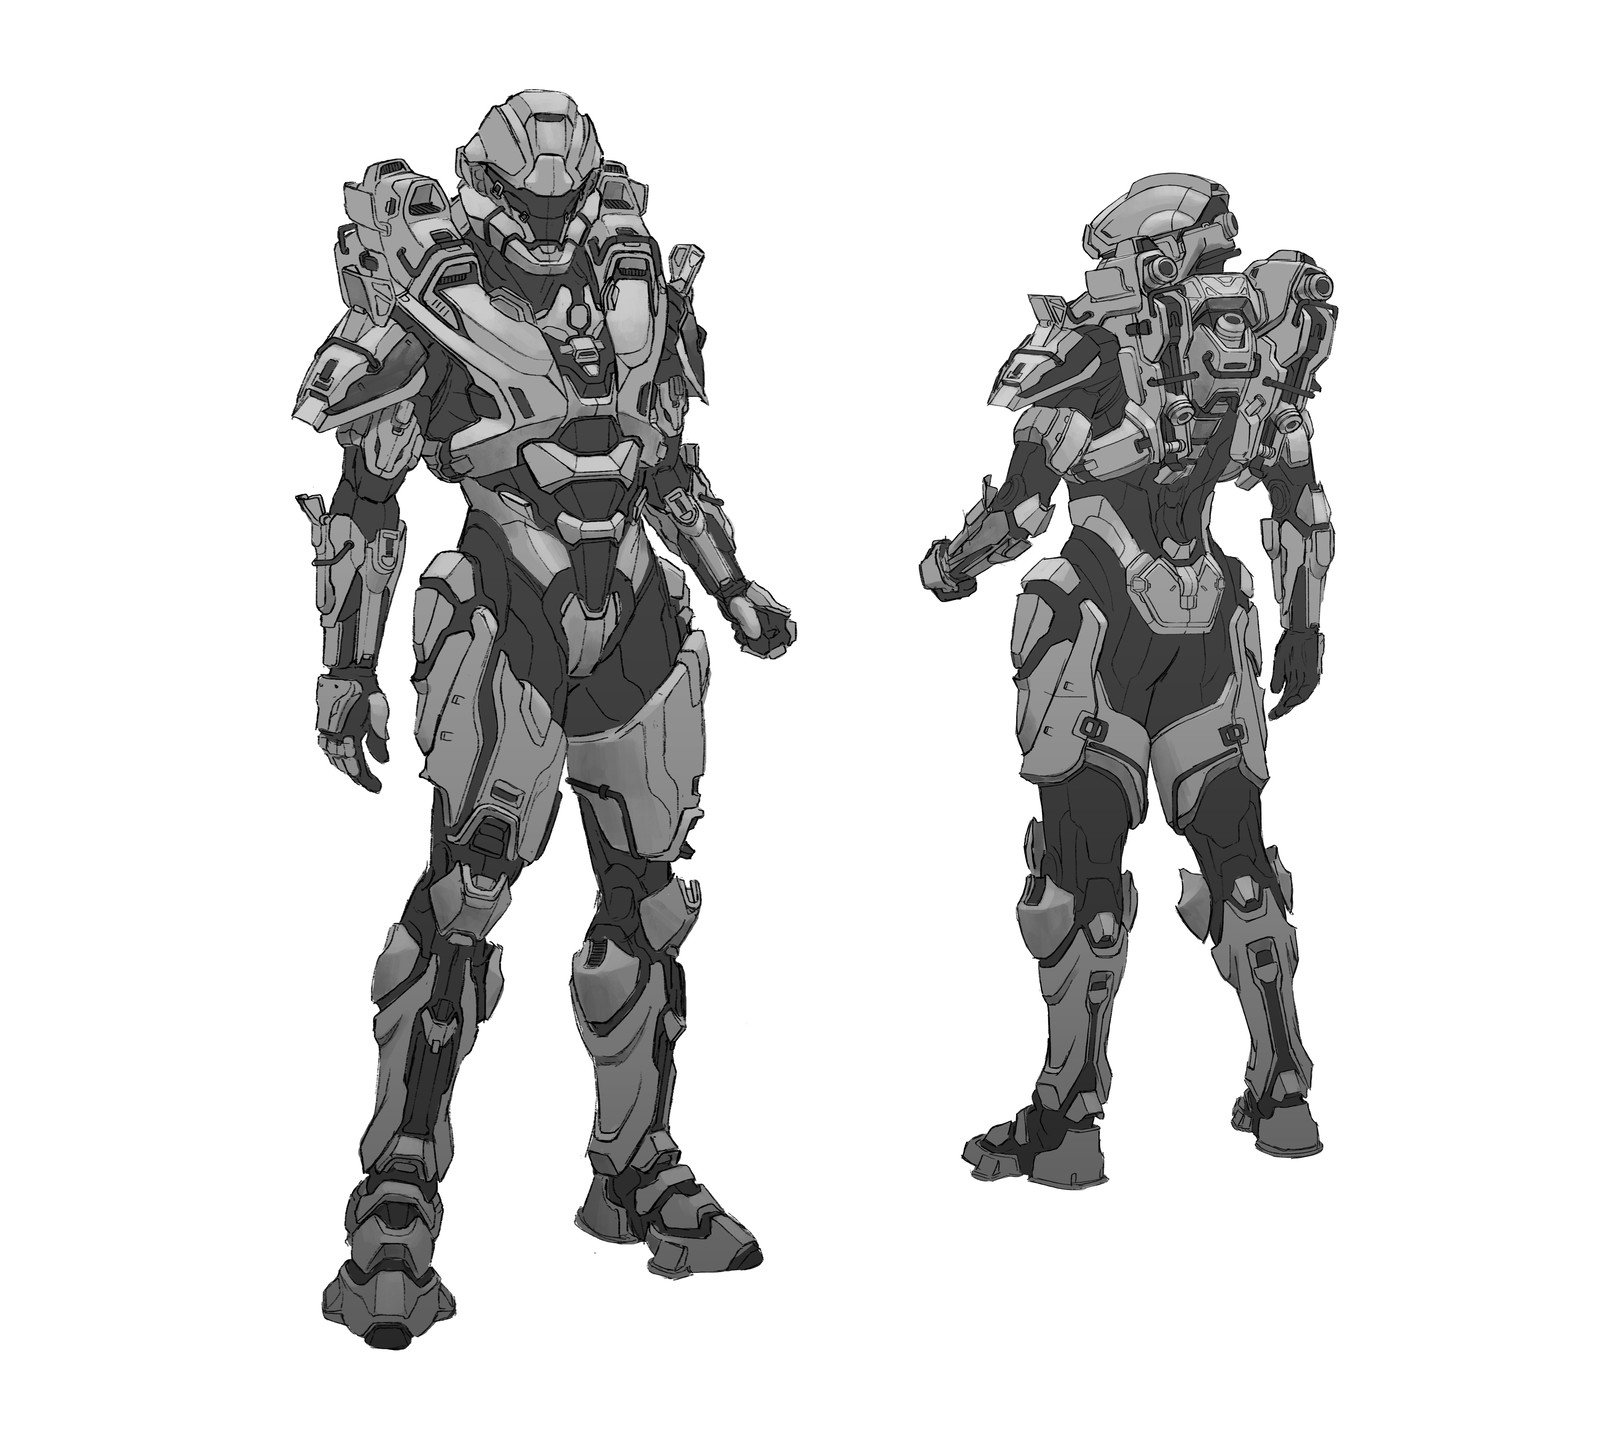 Halo Spartan Armor Design.